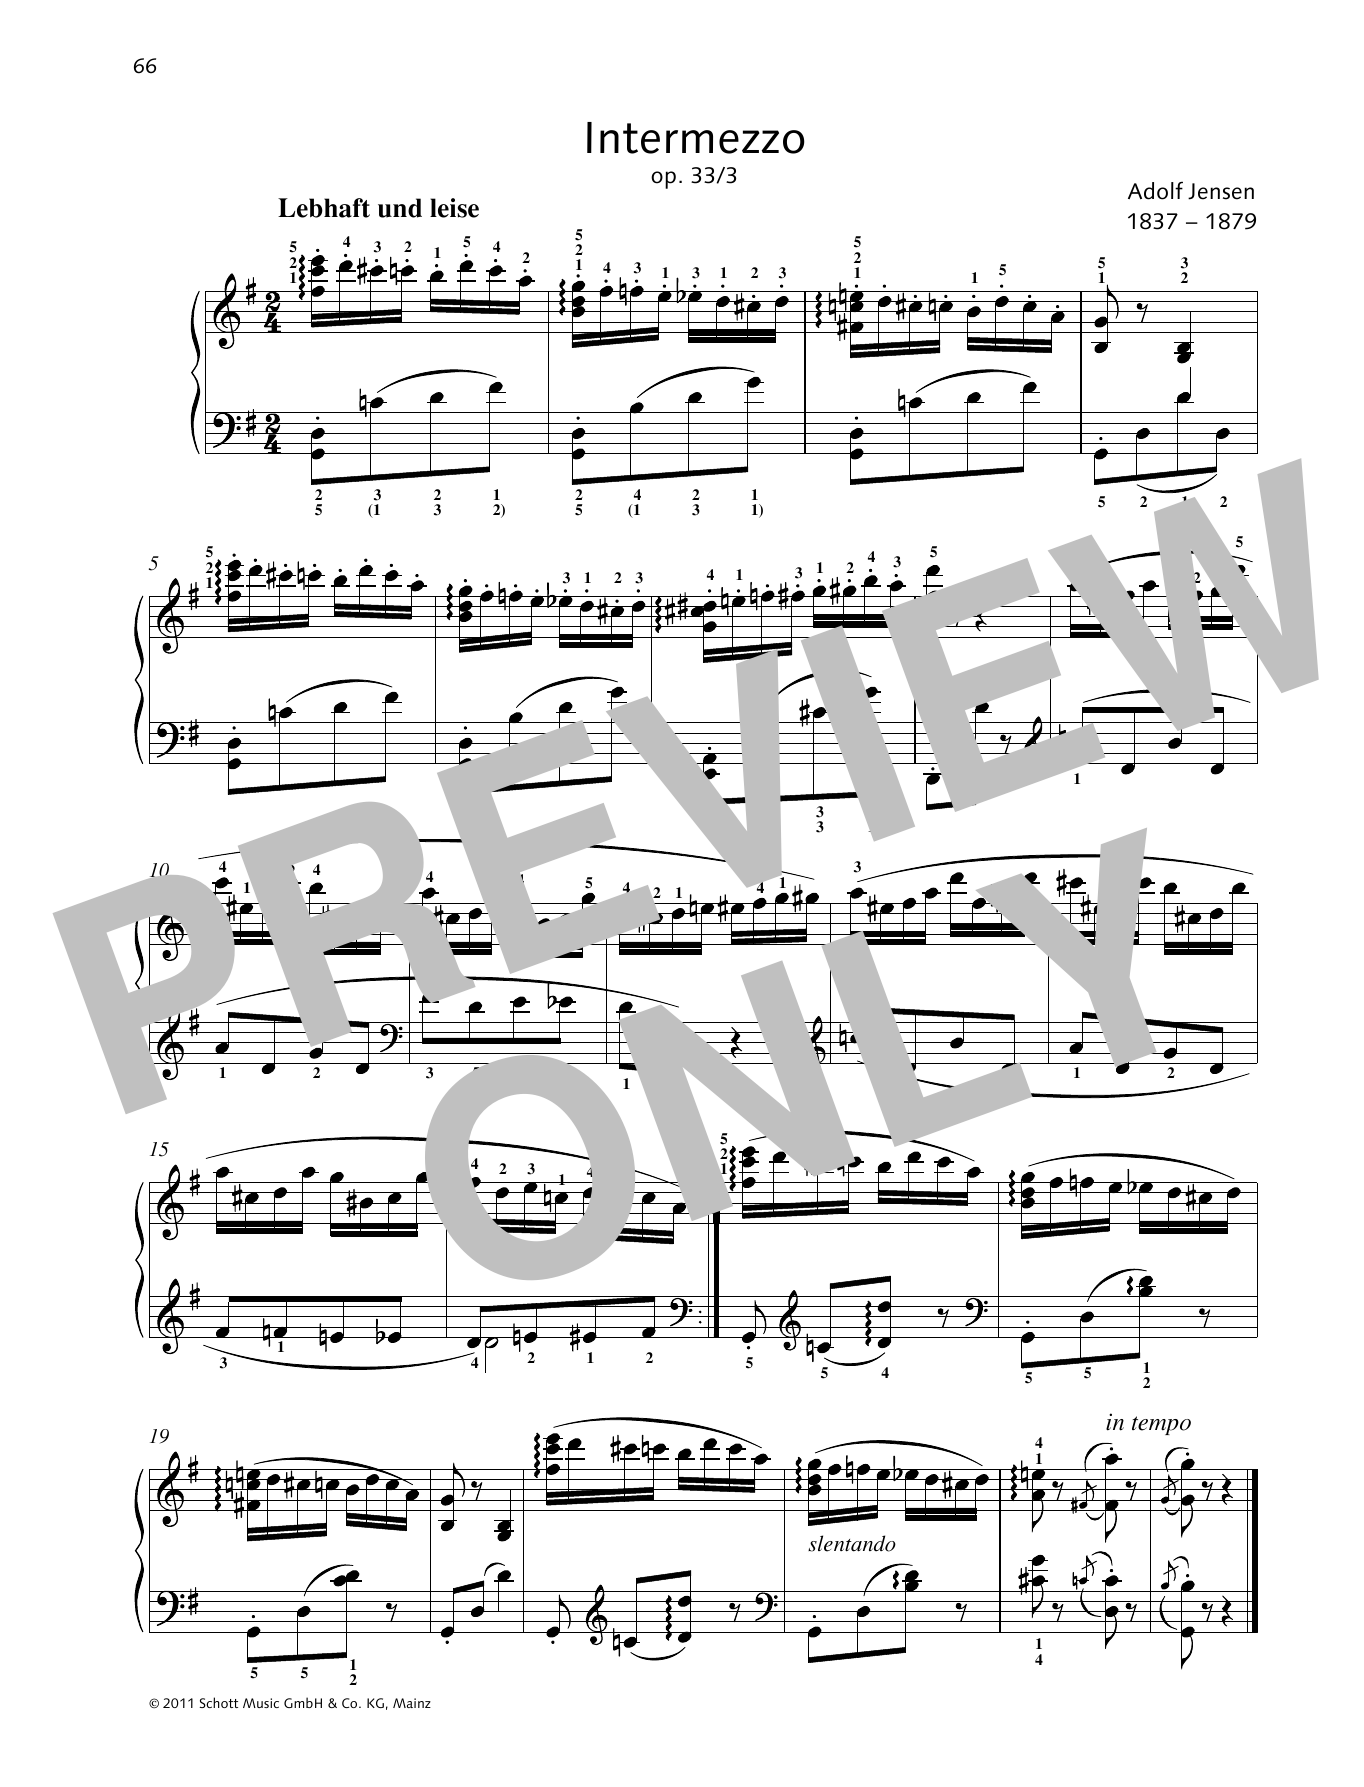 Adolf Jensen Intermezzo Sheet Music Notes & Chords for Piano Solo - Download or Print PDF